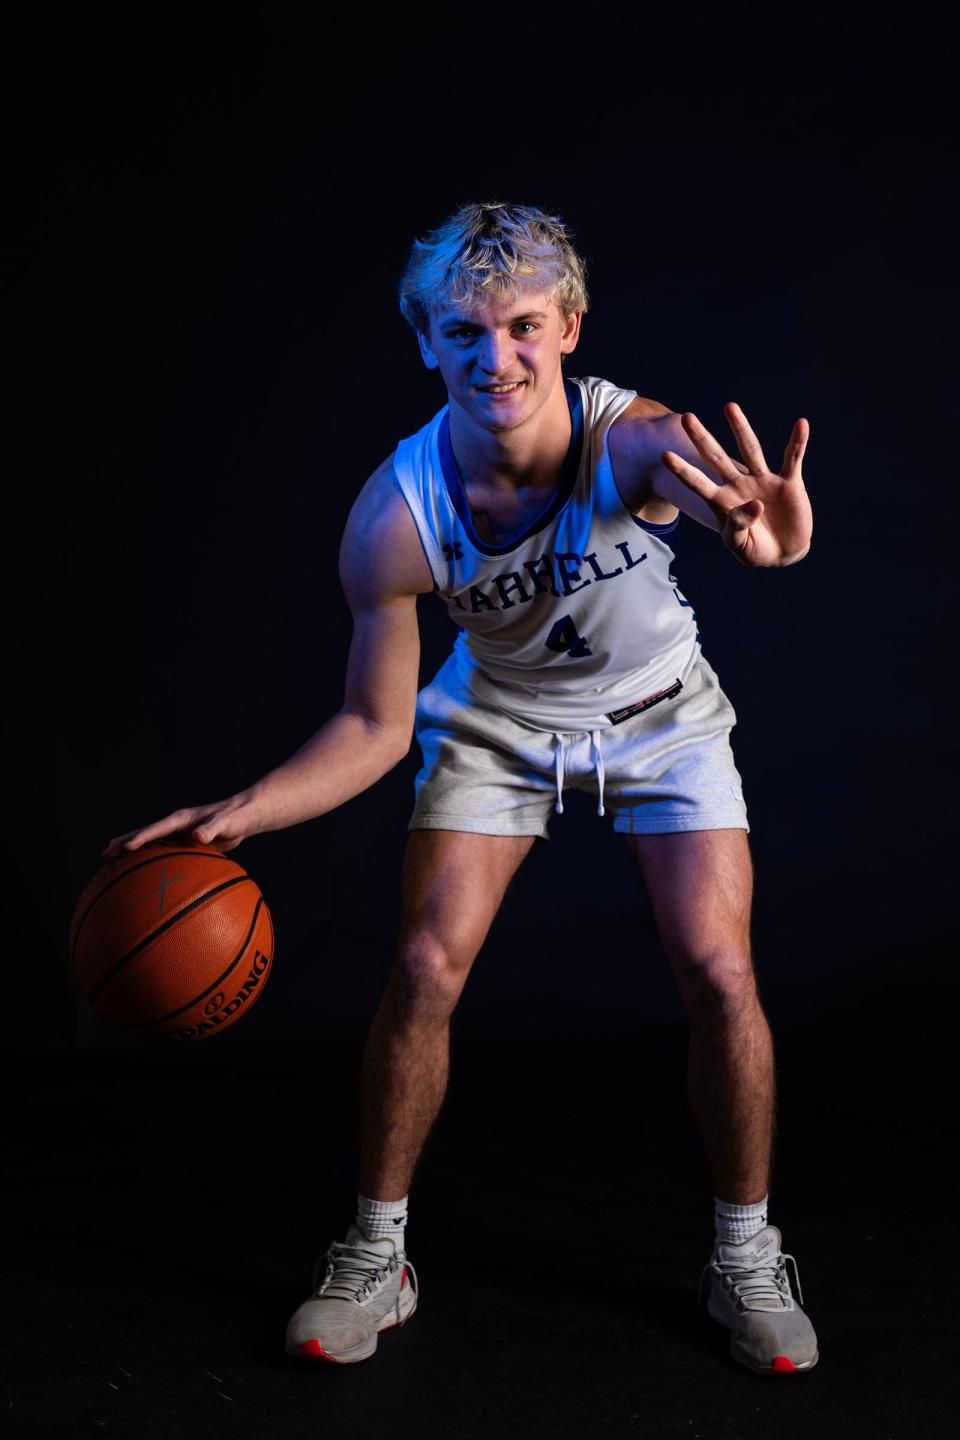 Jarrell's Mason Dotson plays three sports: basketball, baseball and football. He wears No. 4 in all sports.